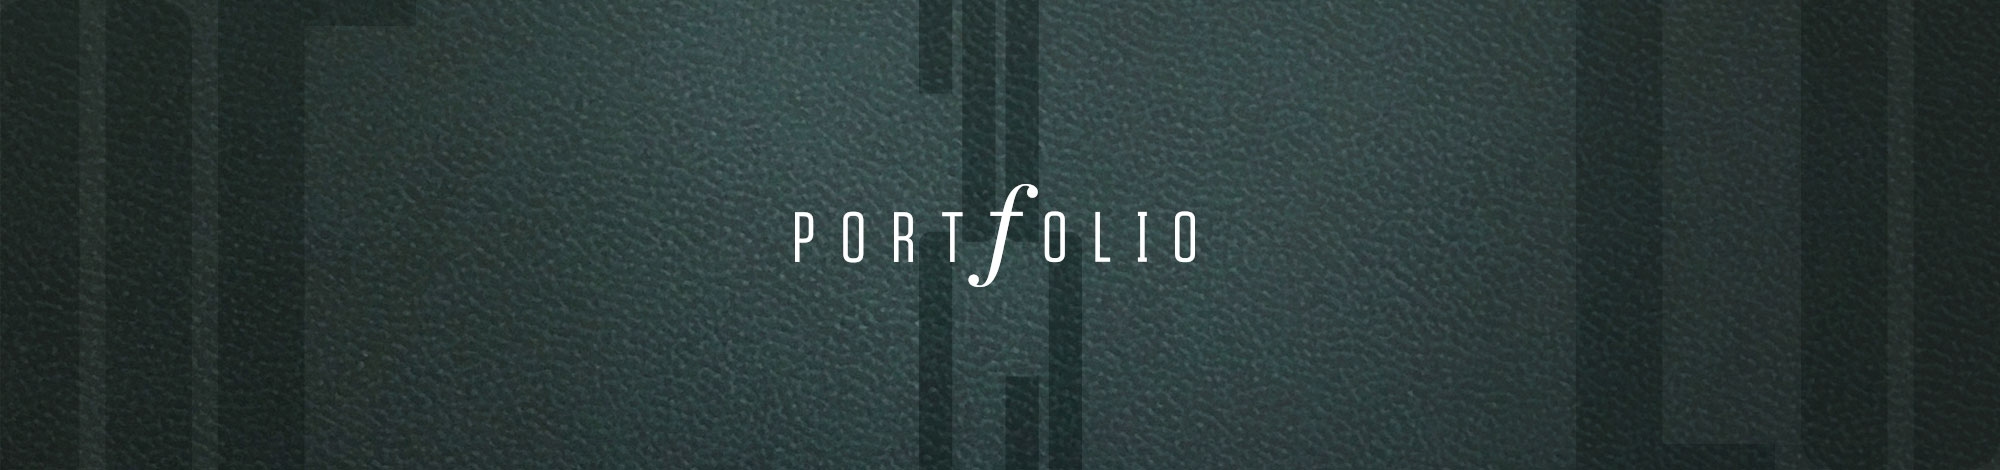 Portfolio25_header